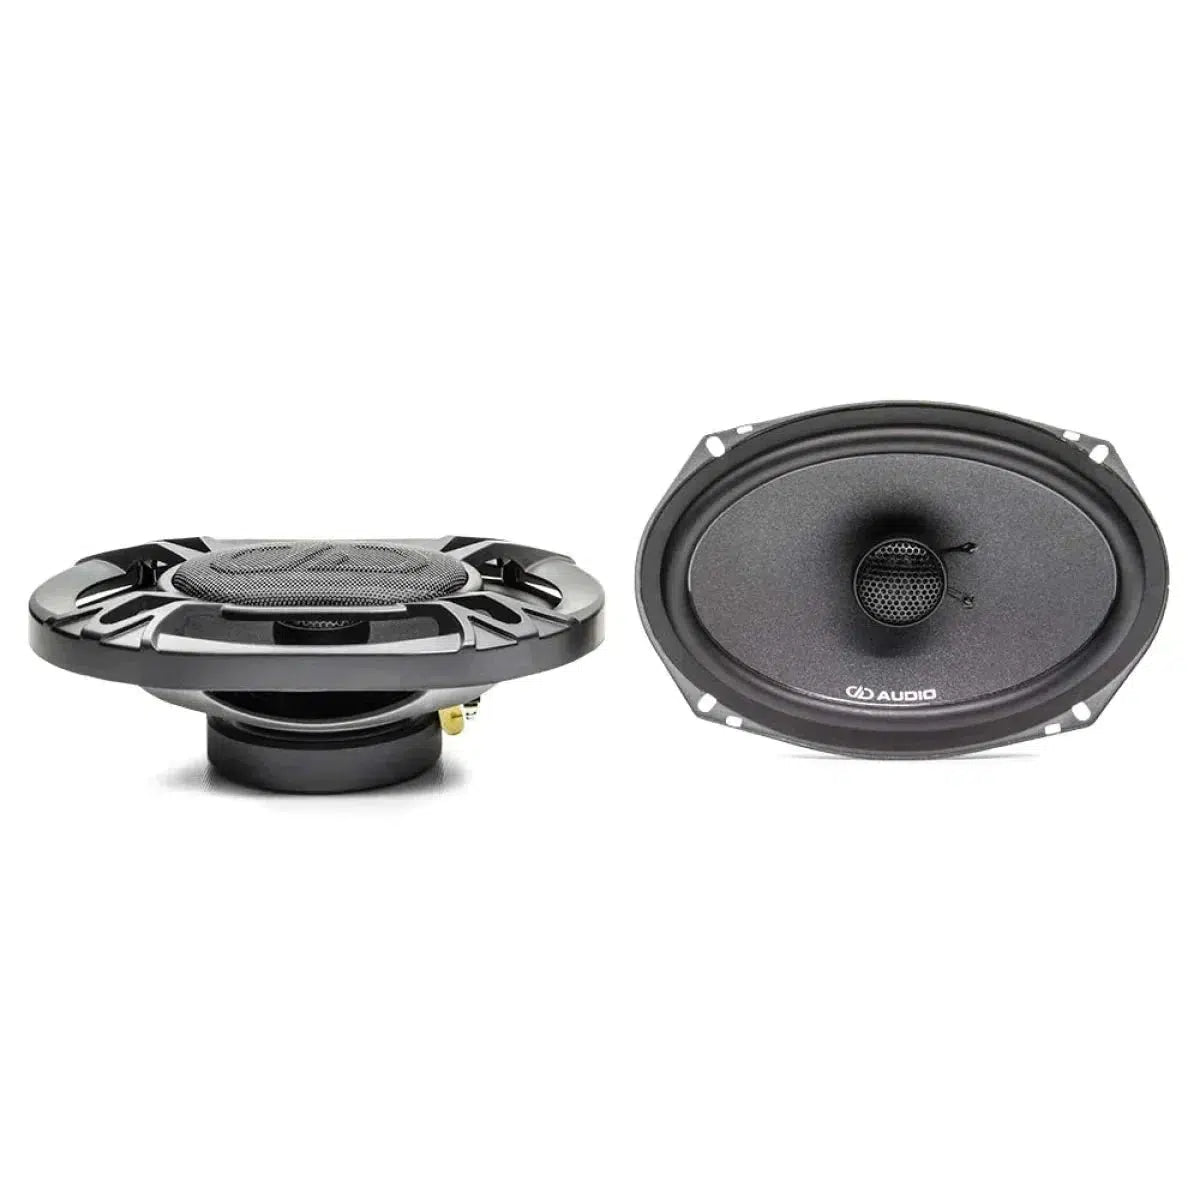 DD Audio-DX6x9-6 "x9" speaker set-Masori.de